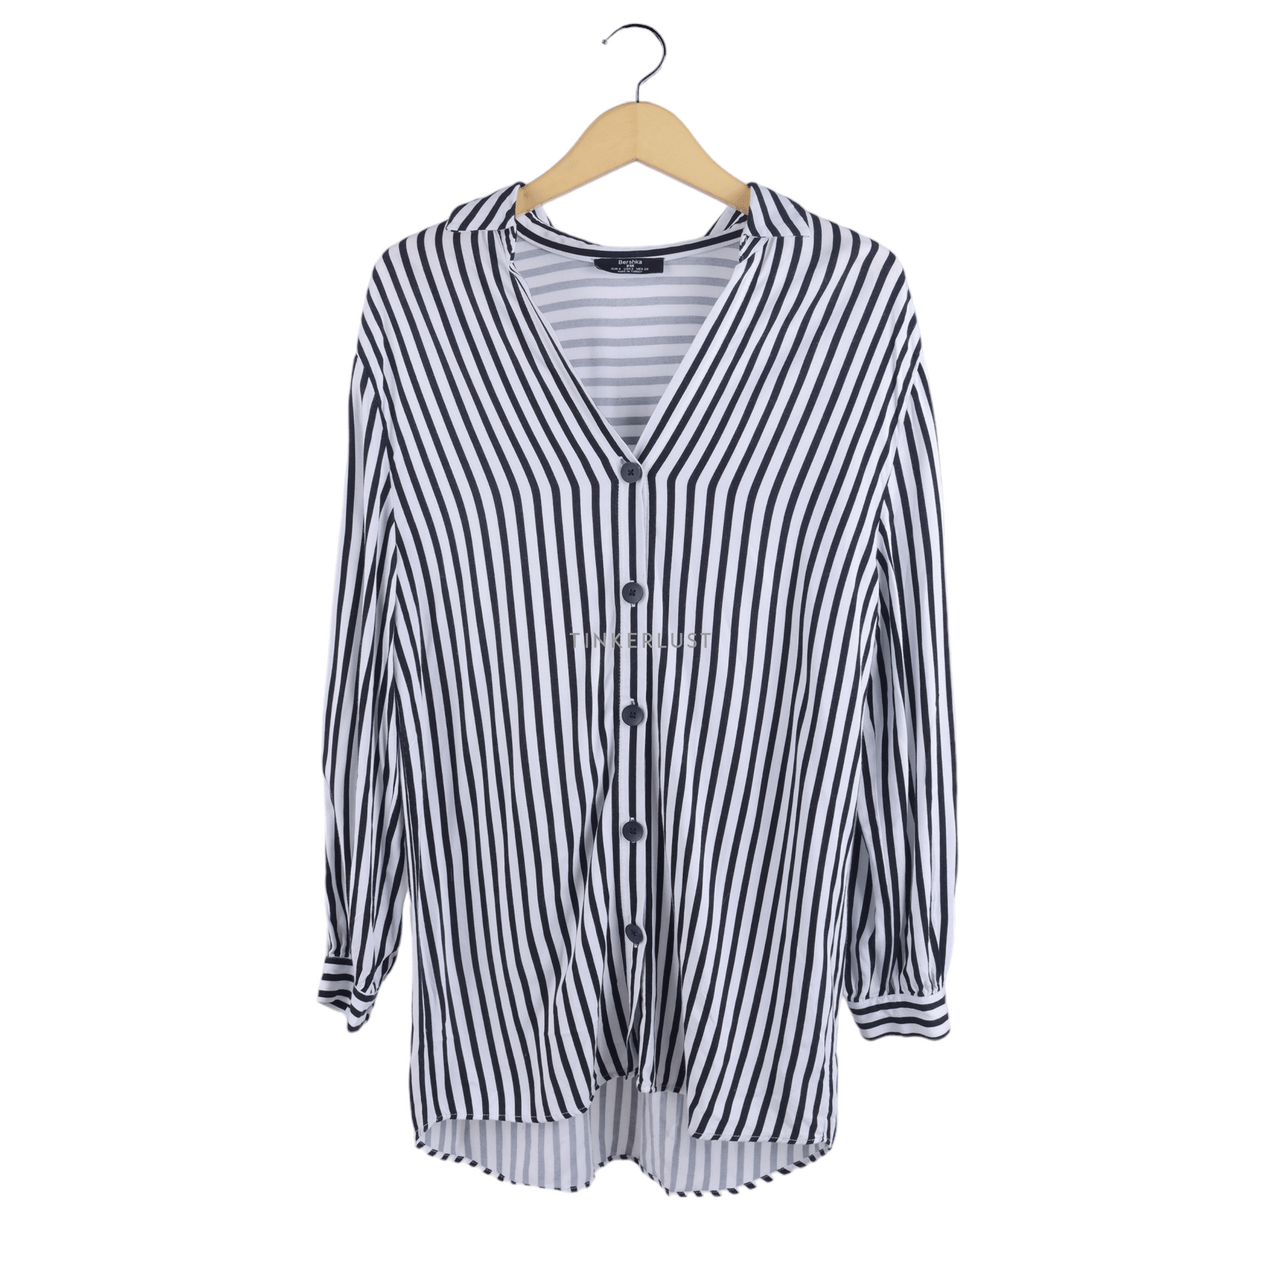 Bershka Black & White Stripes Shirt